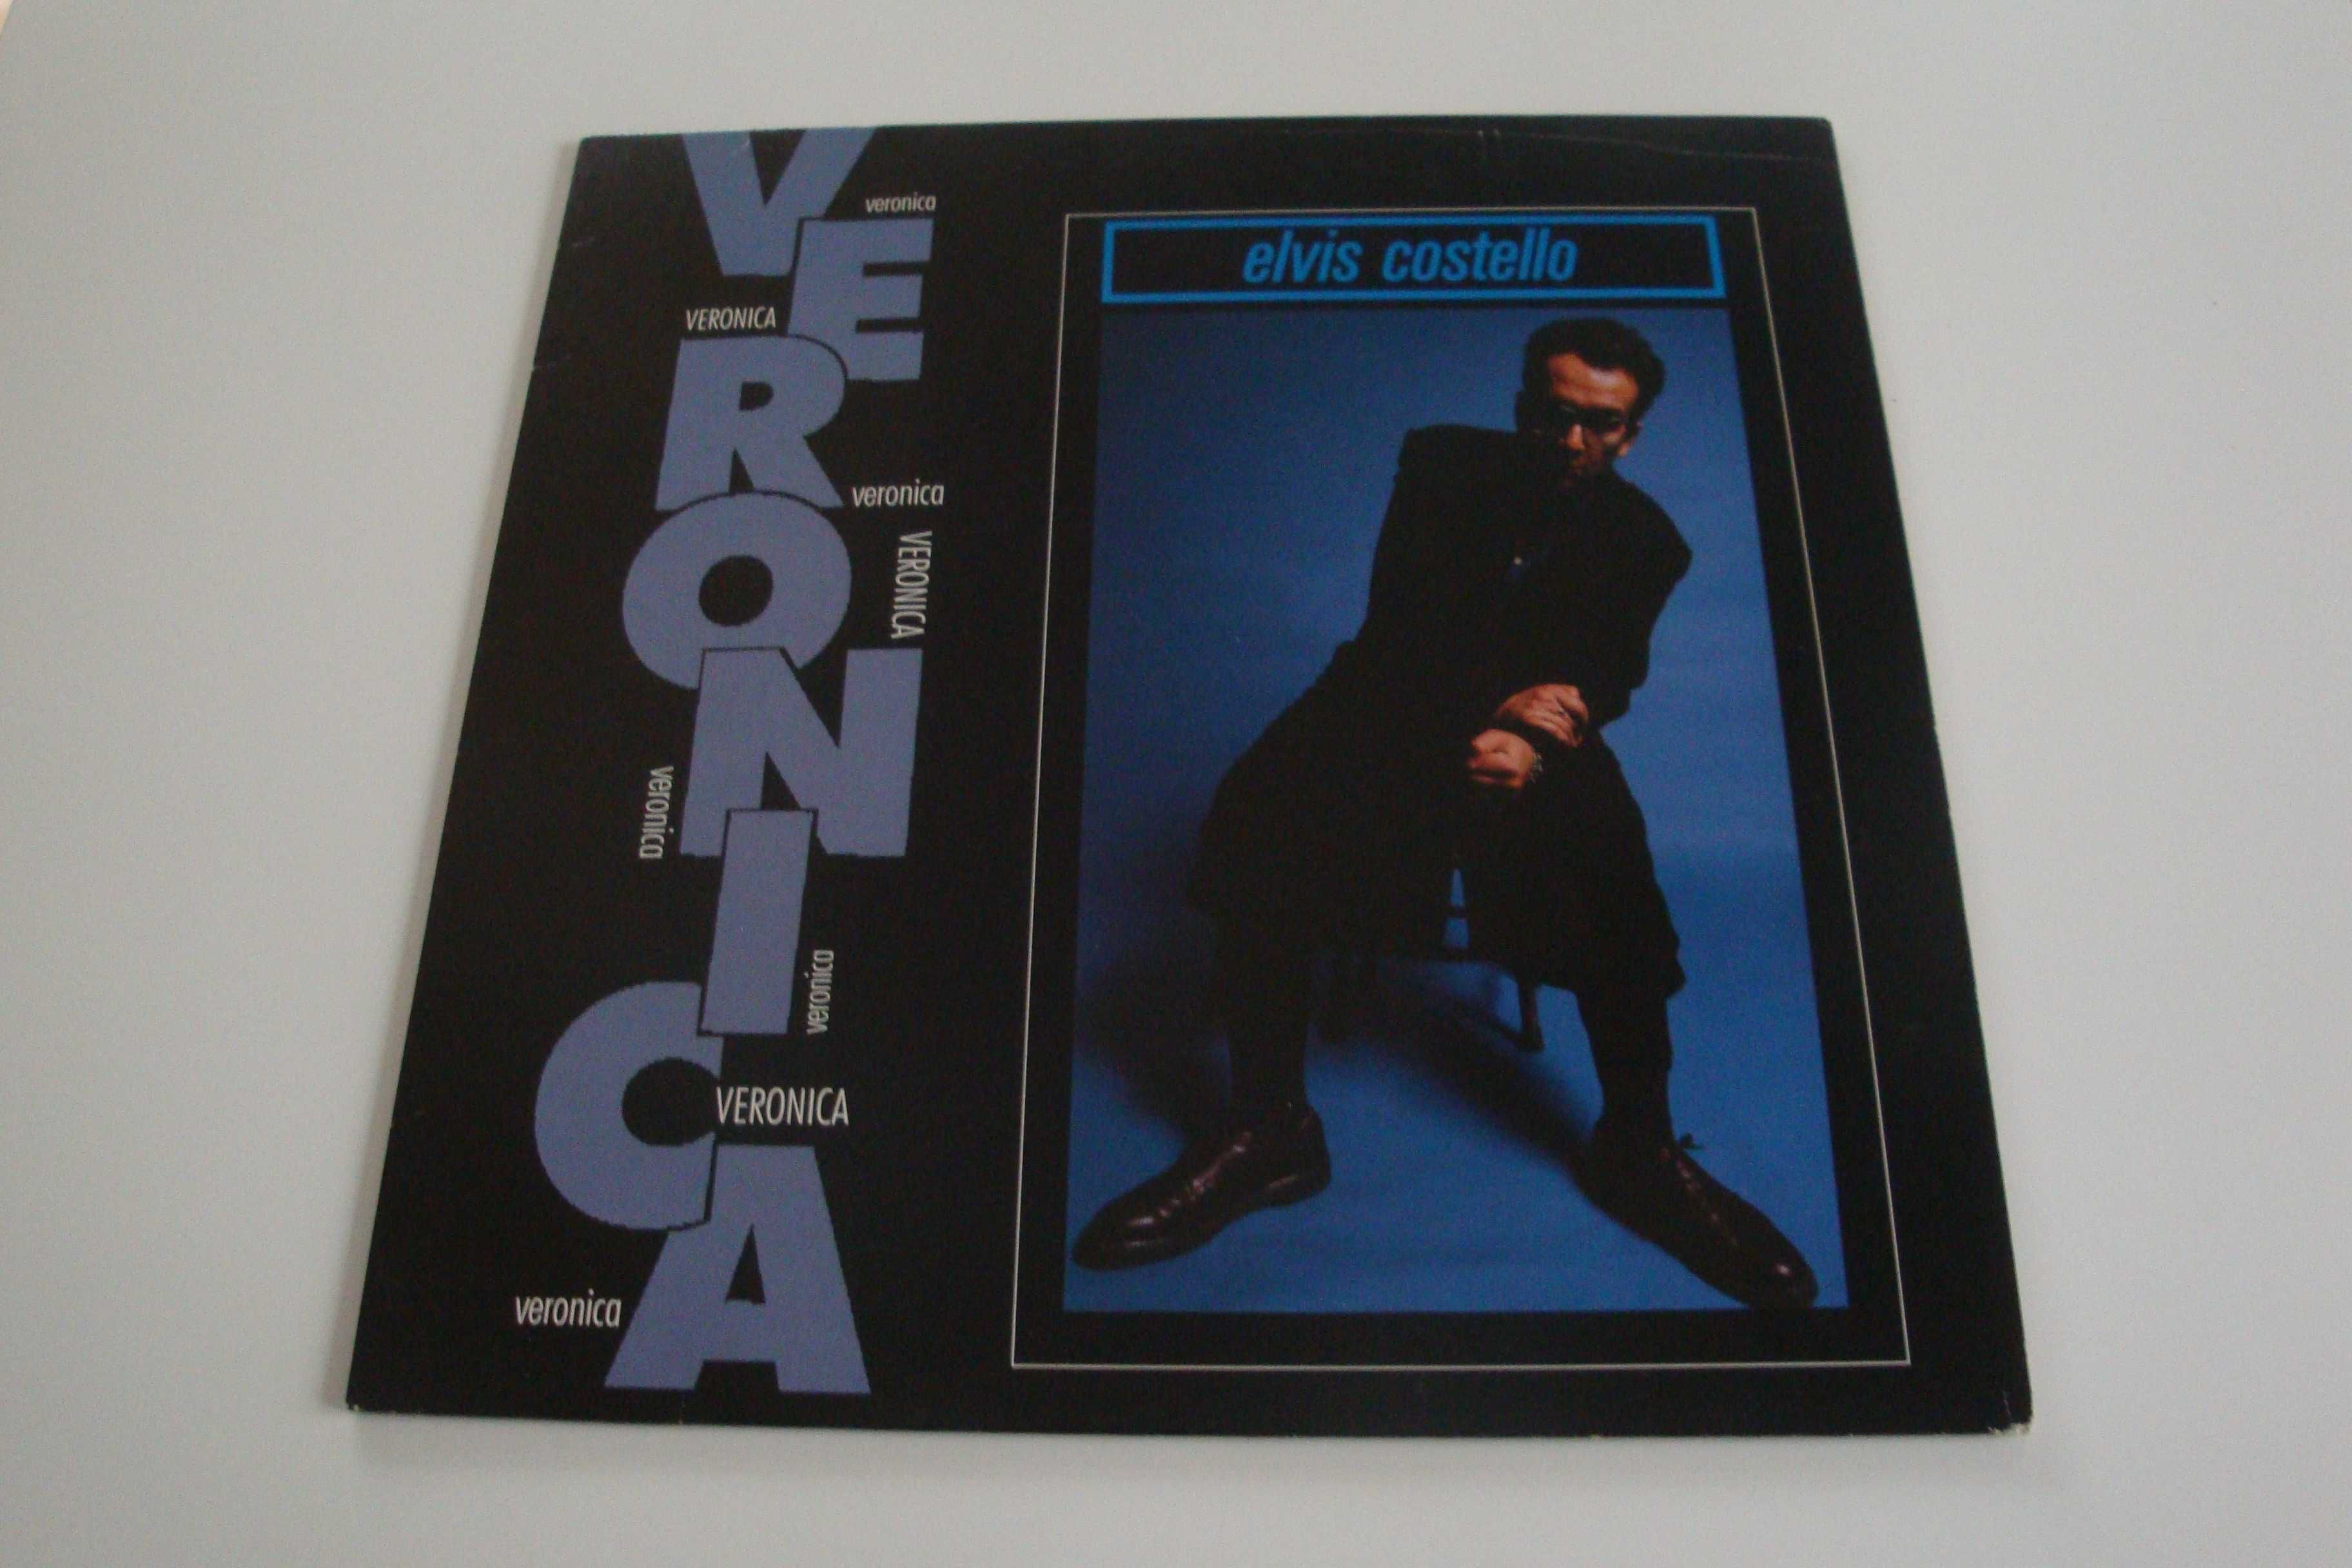 Elvis Costello – Veronica 12"